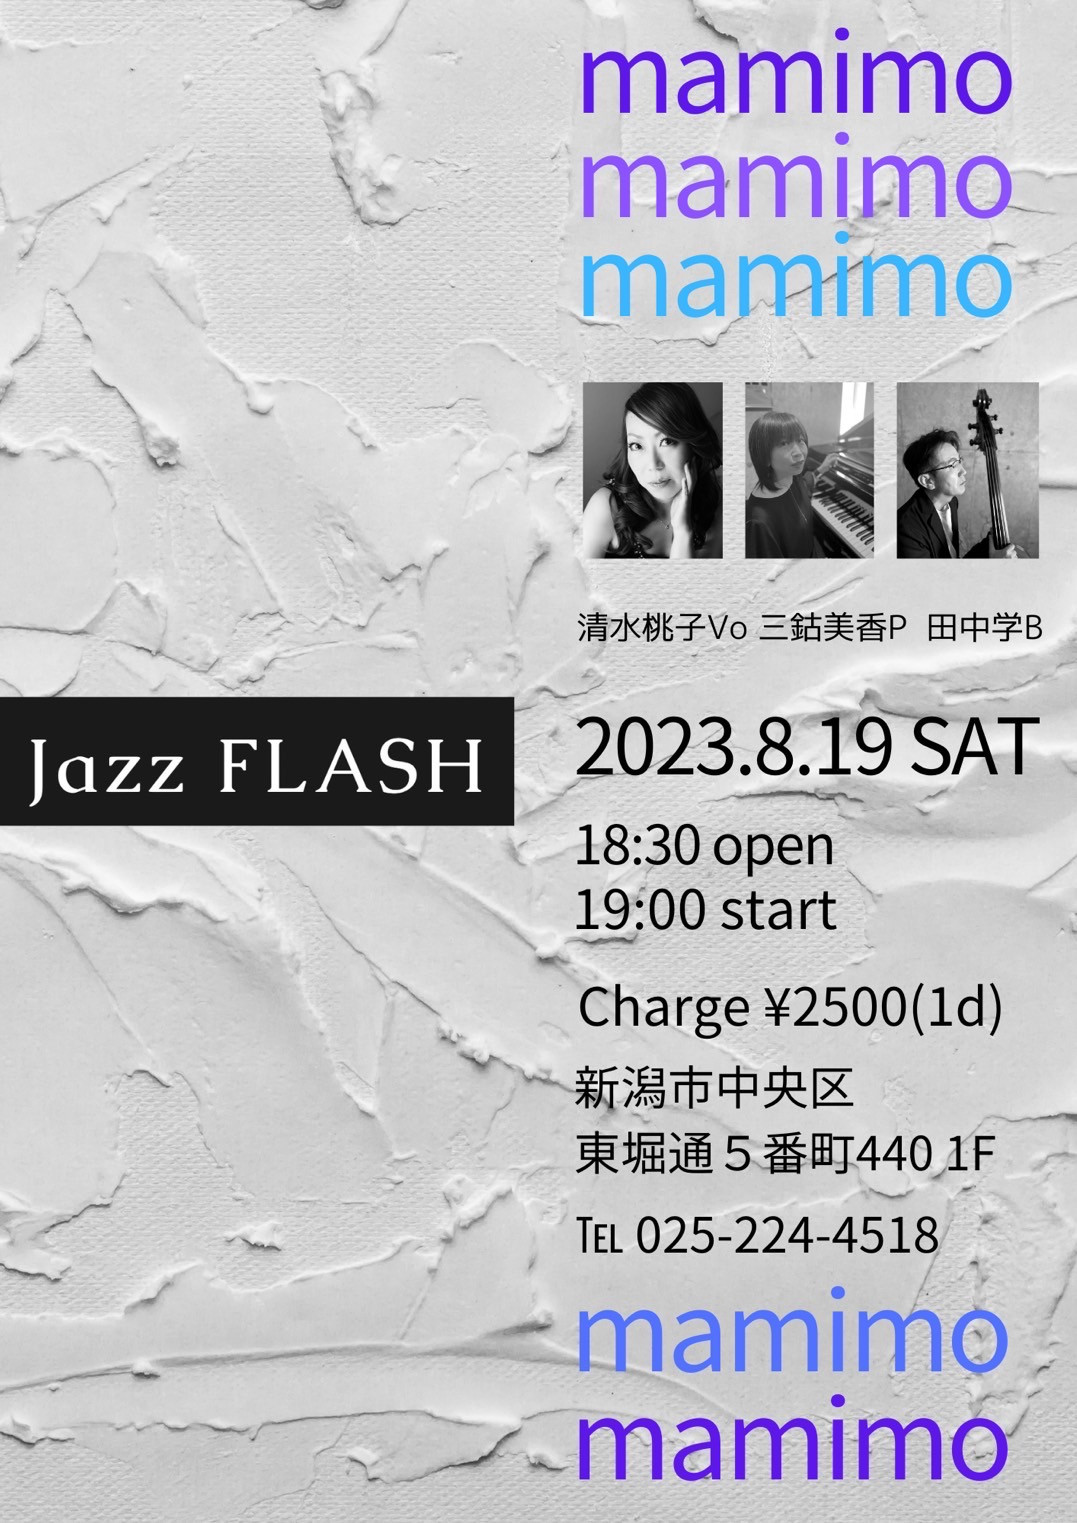 8/19(土) ma mi mo@Jazz FLASH